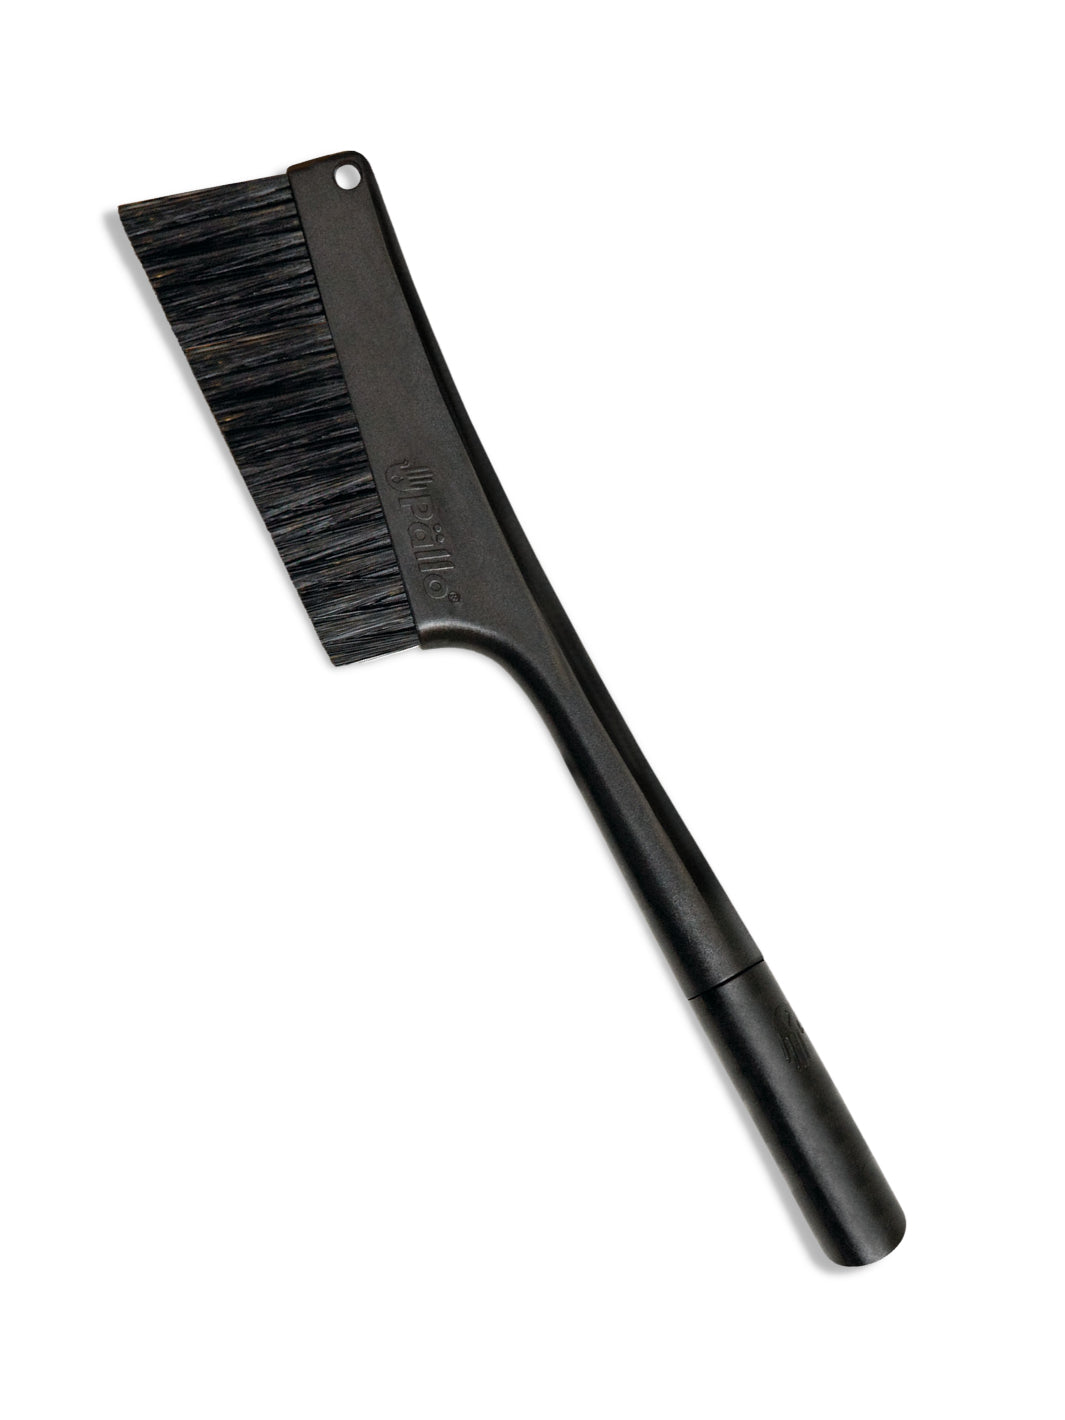 PALLO GrindMinder 2.0 Countertop Brush